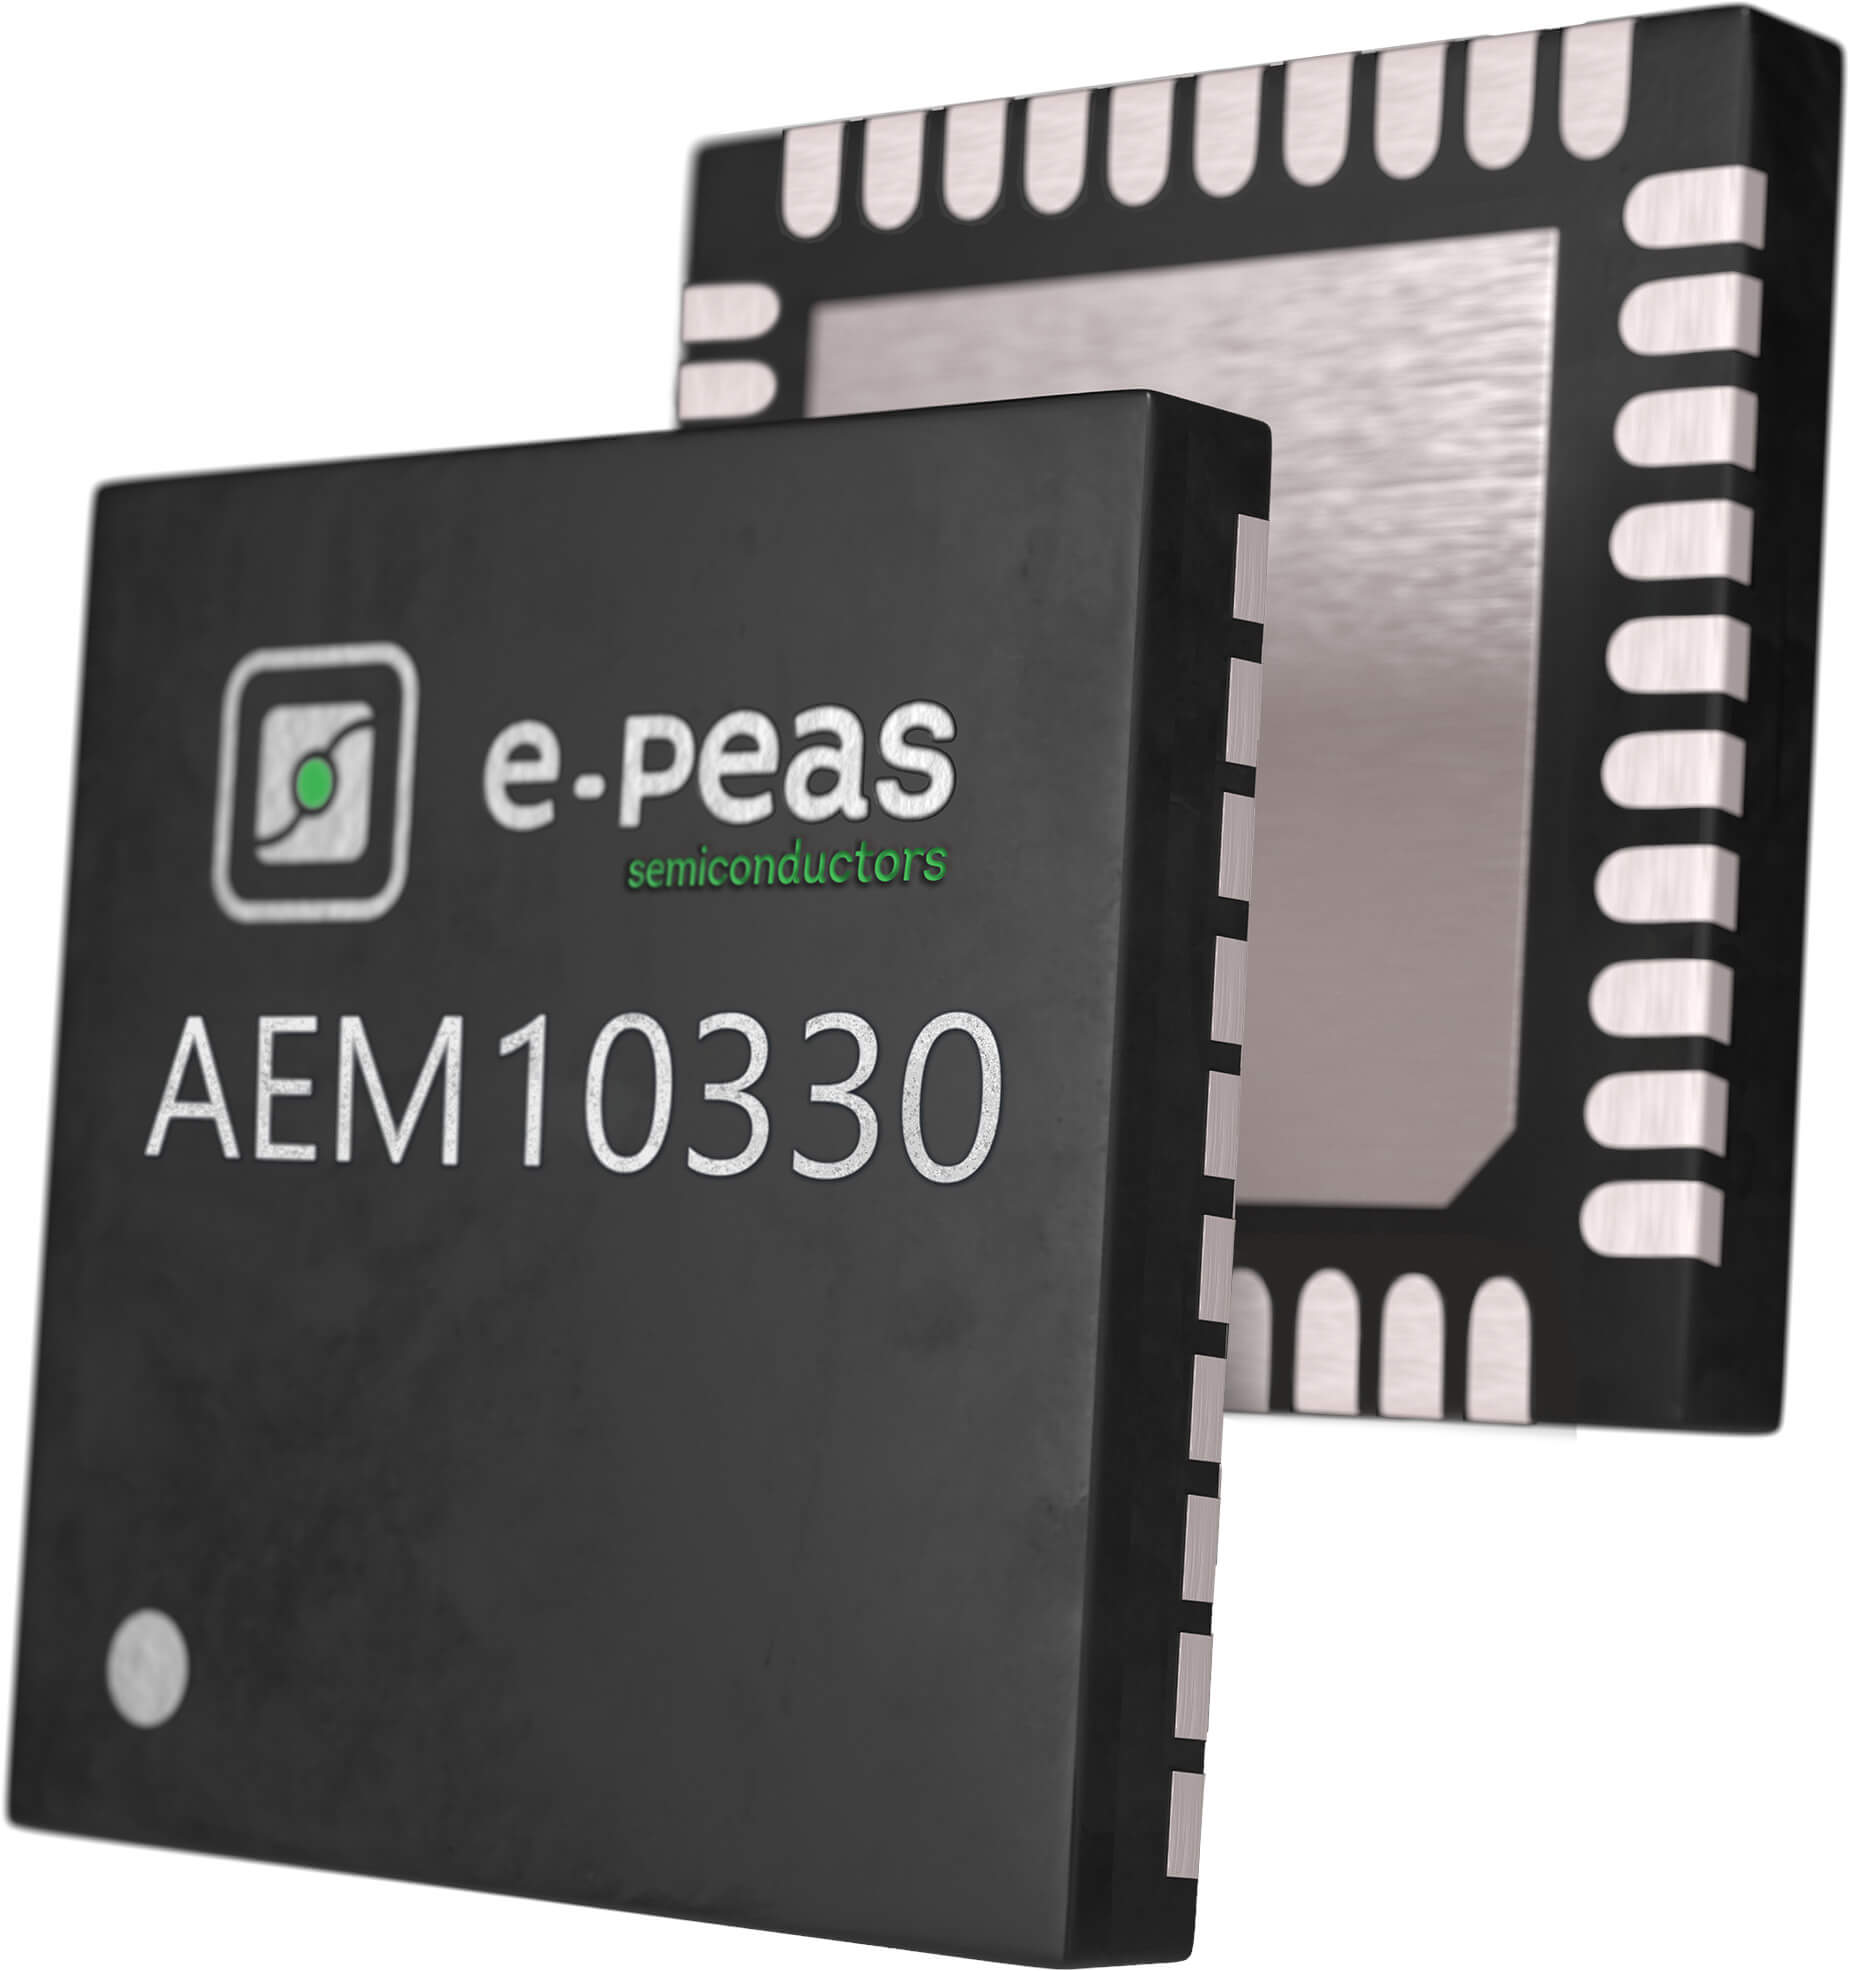 AEM10330 Power Management IC